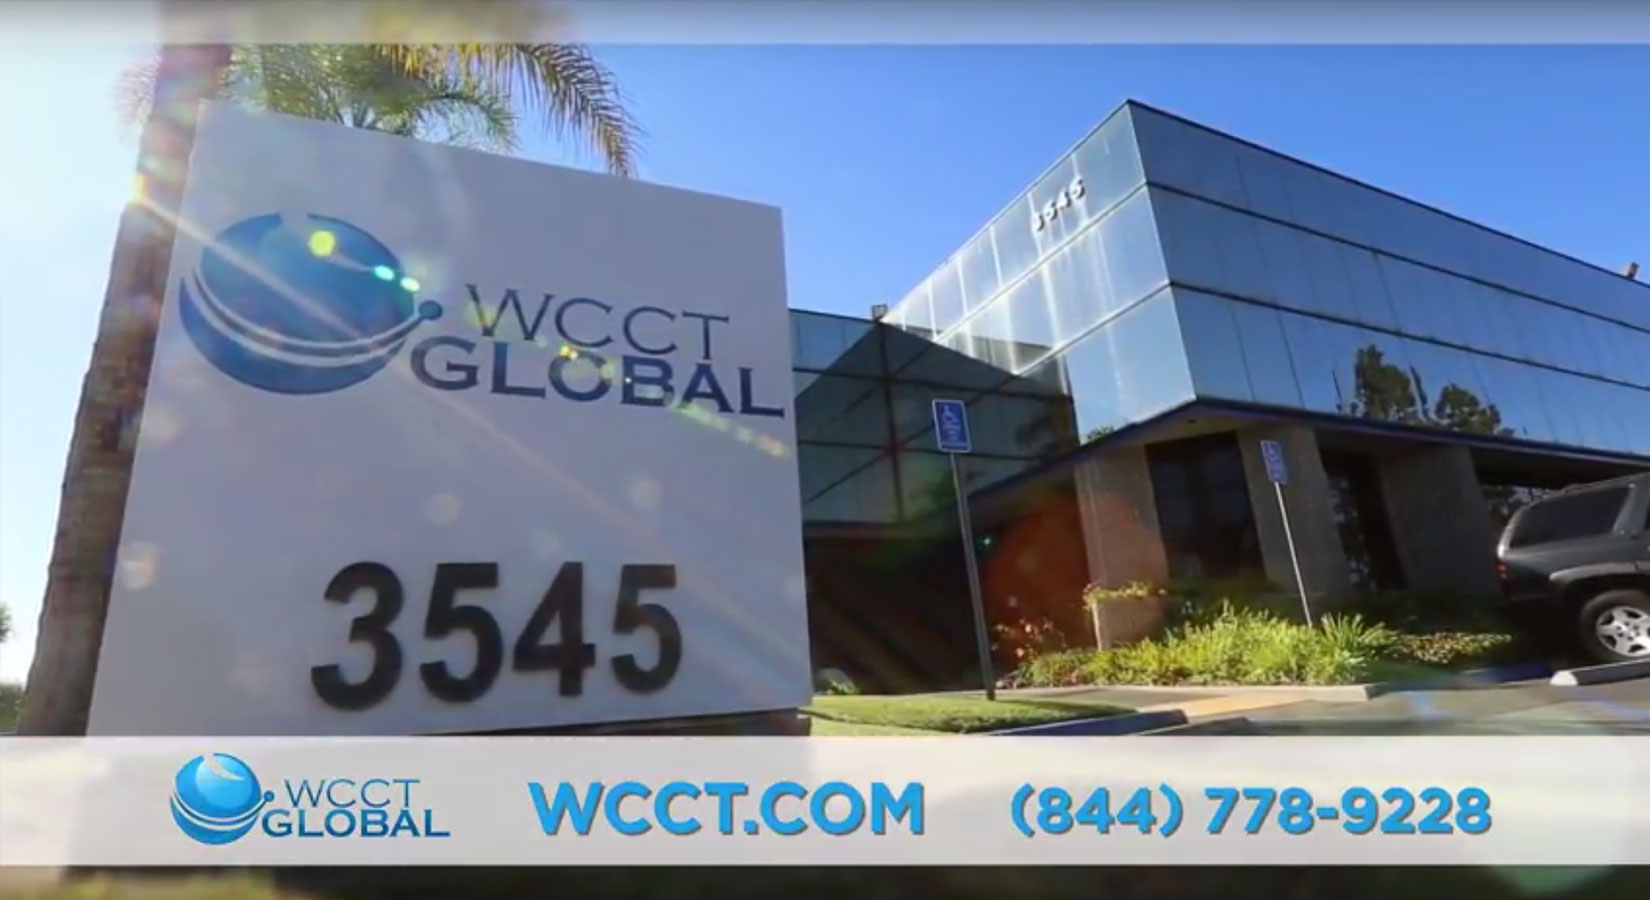 WCCT Global "FluStudy"